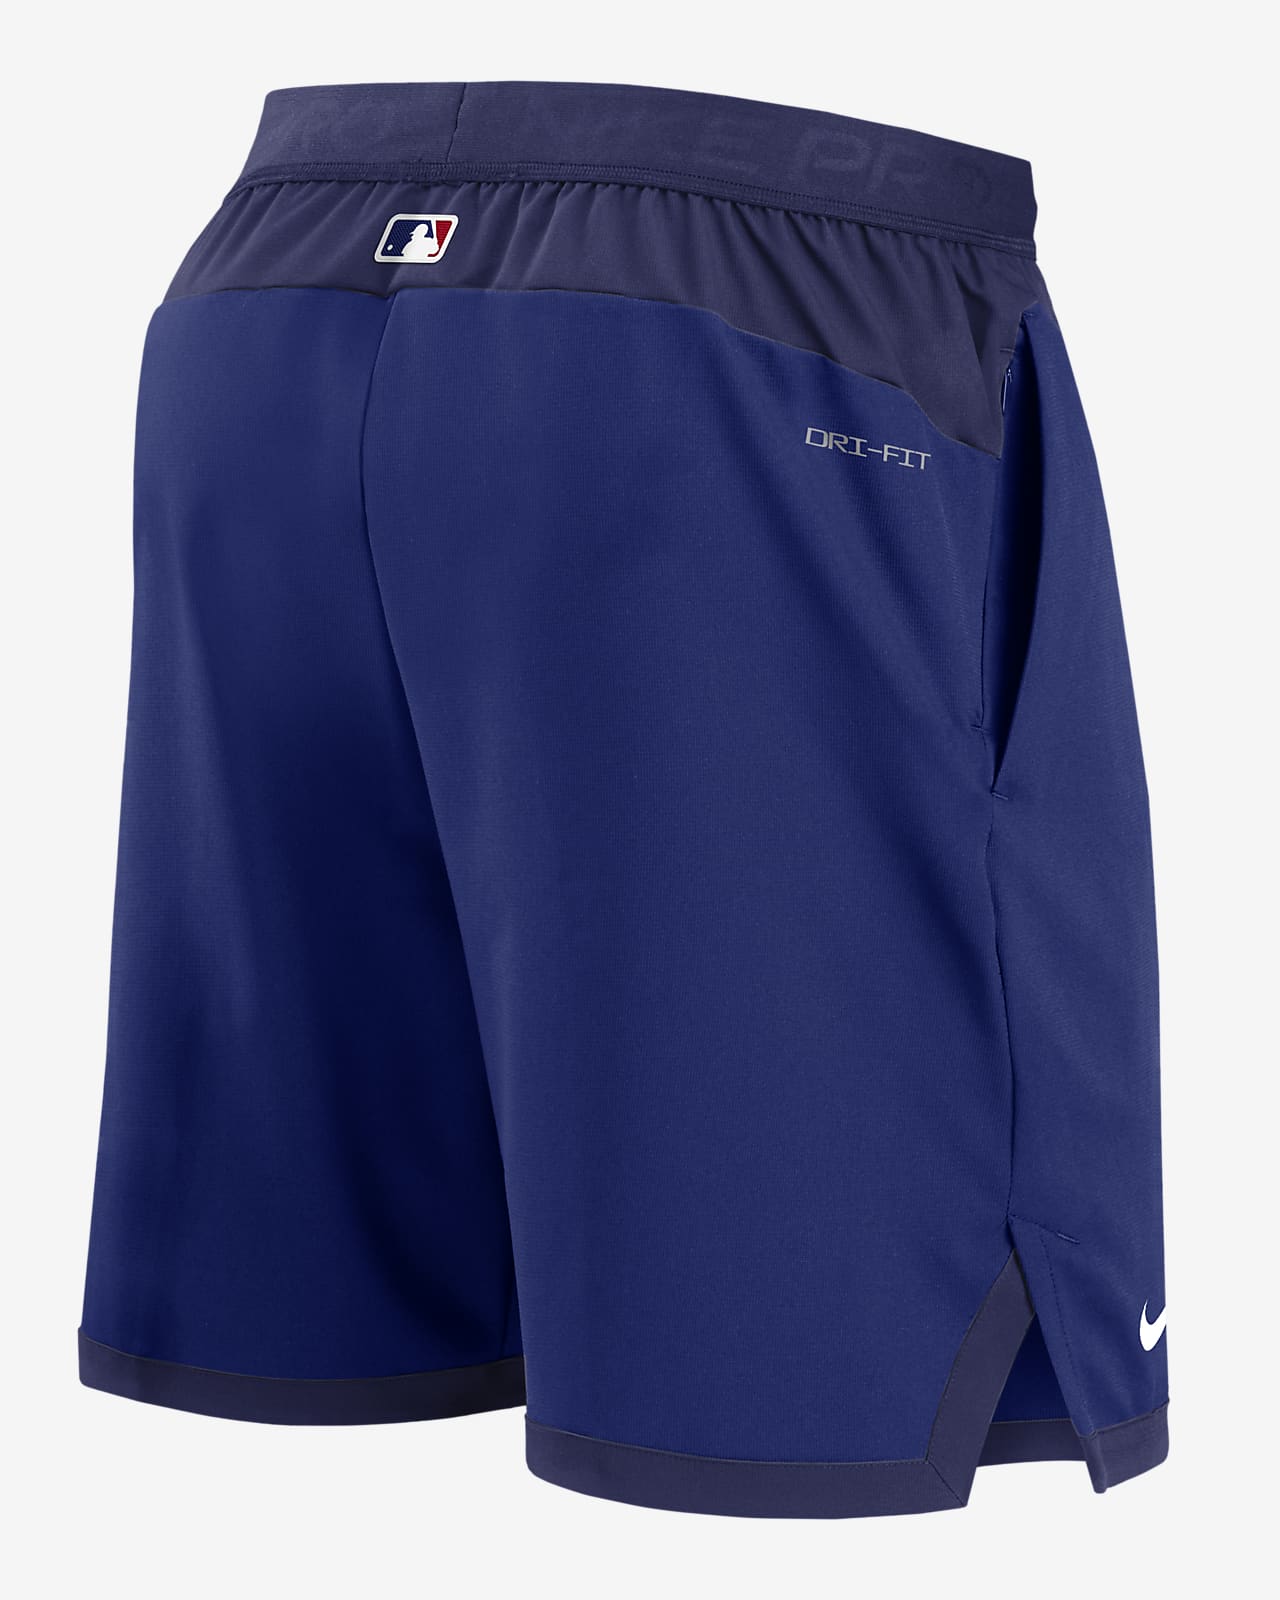 Profile Men's Royal Los Angeles Dodgers Big & Tall Team Shorts